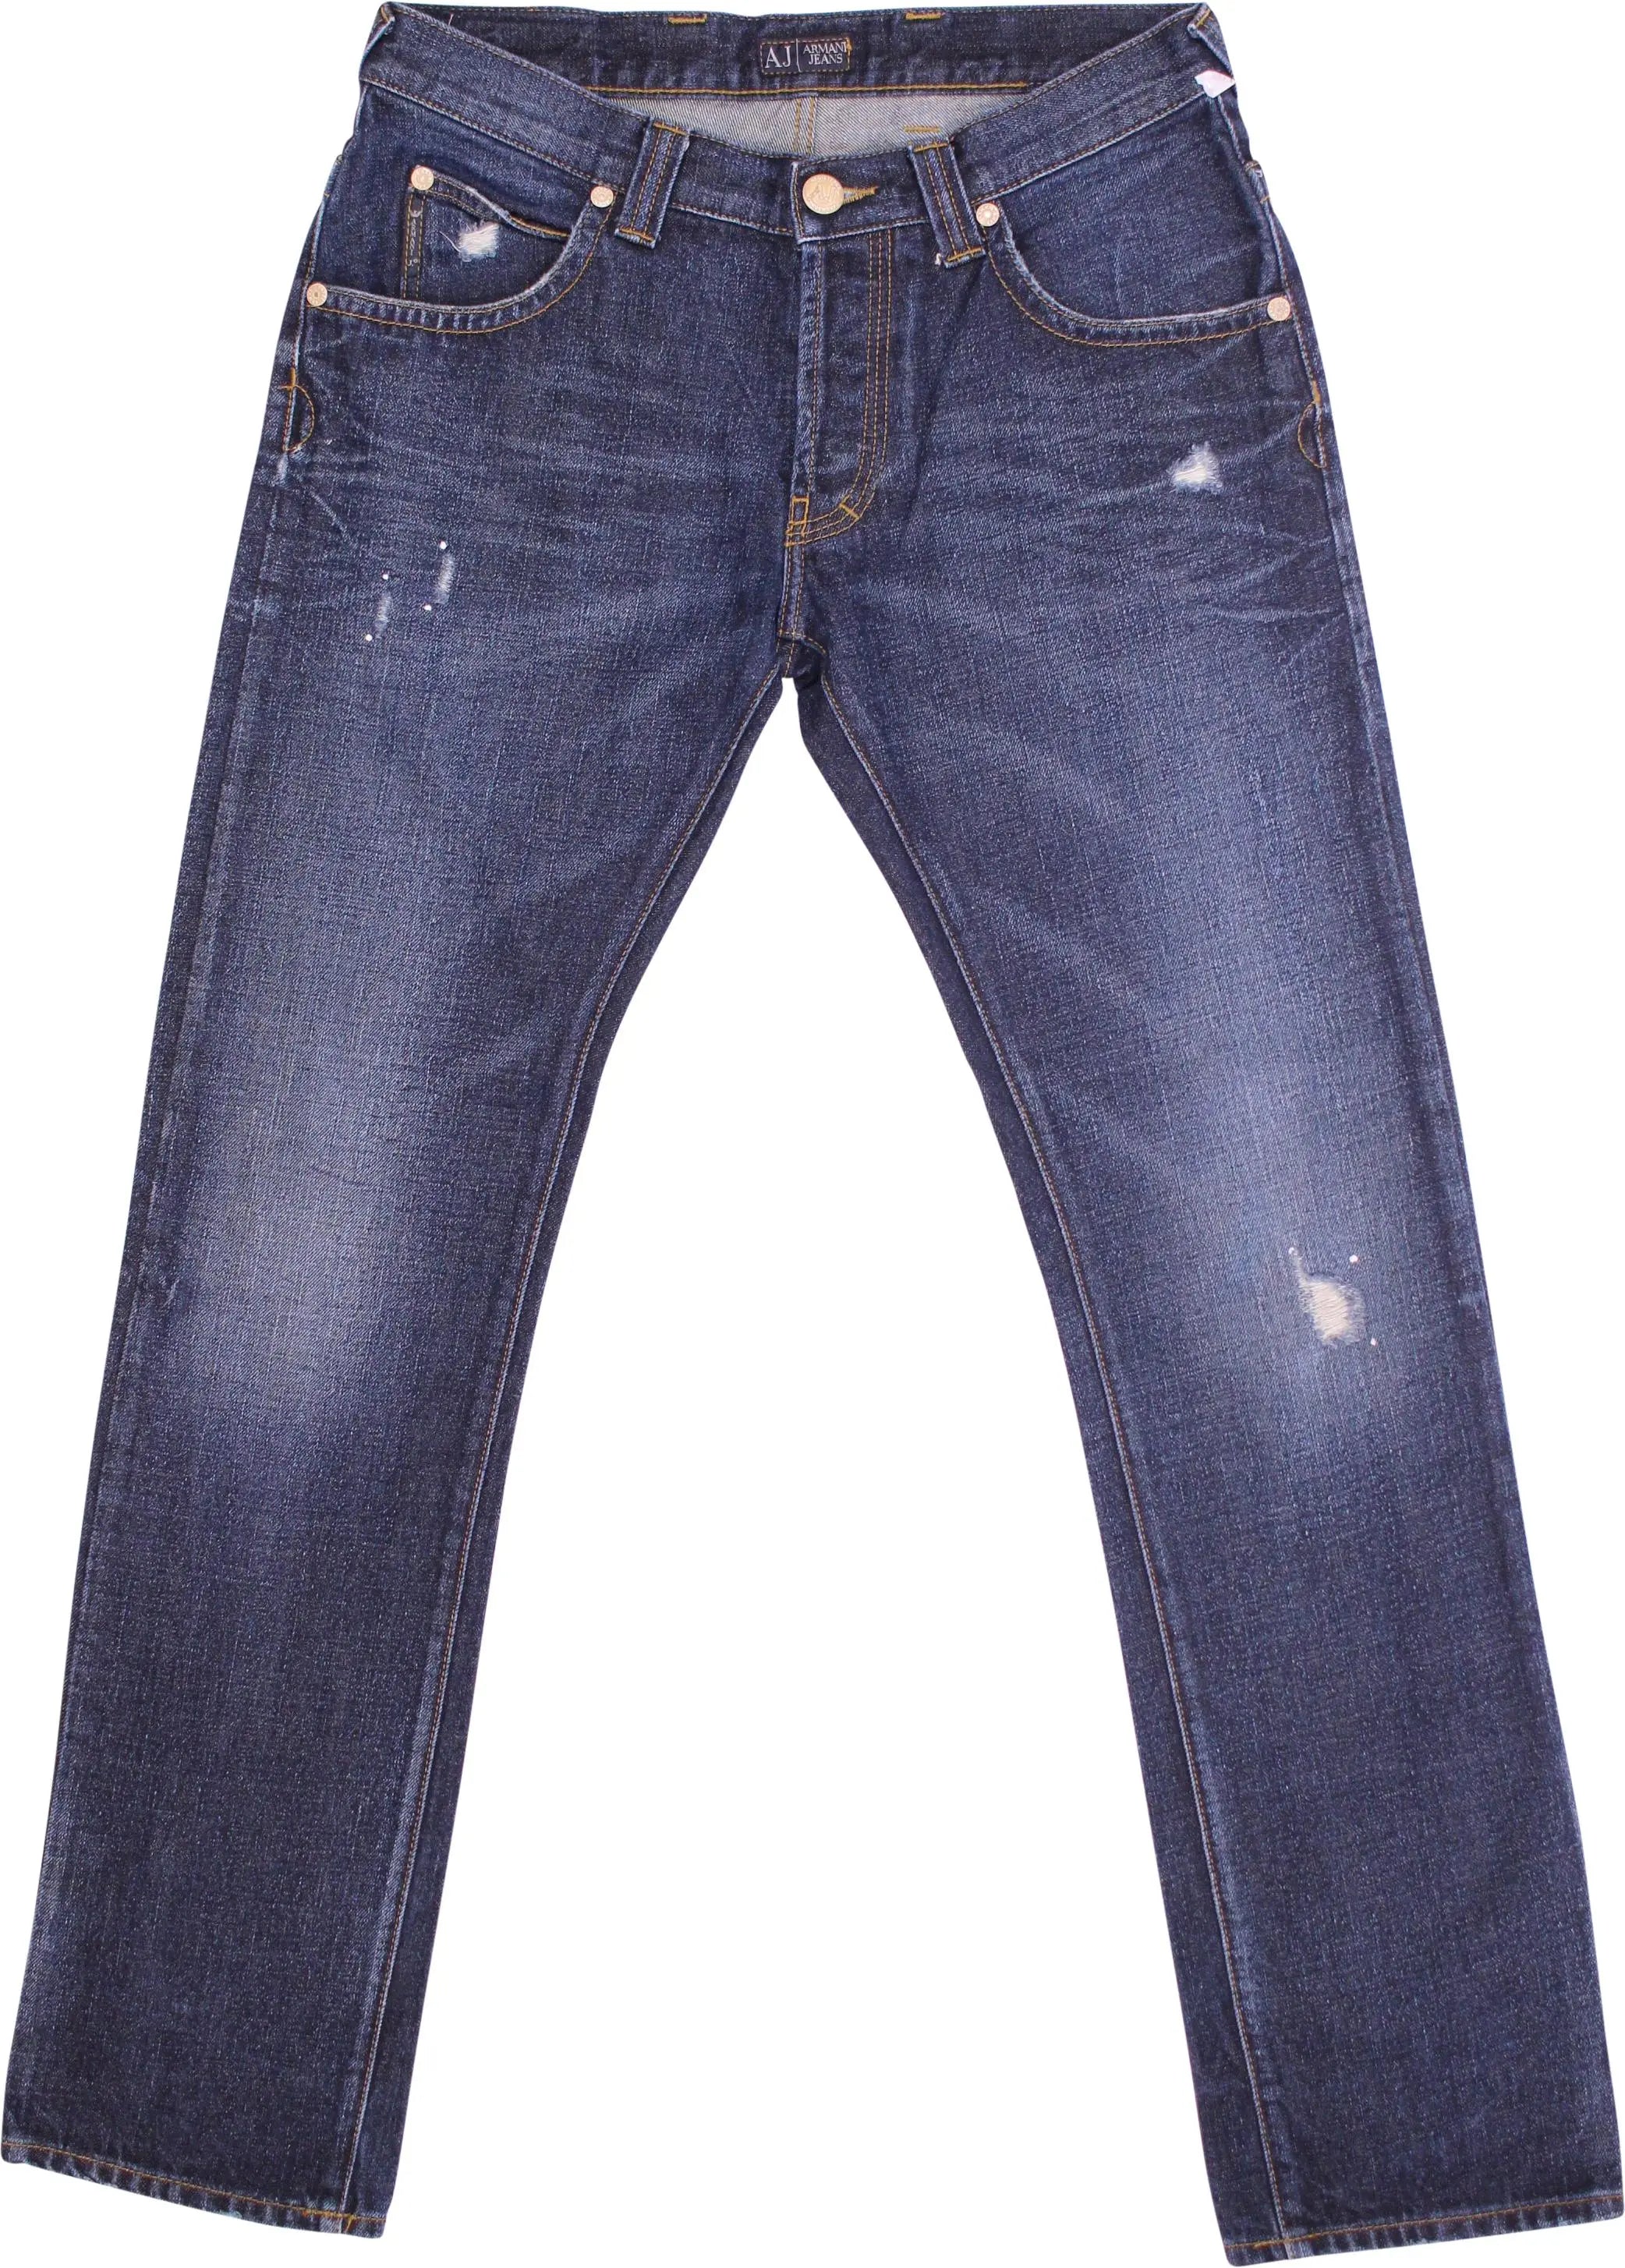 Armani Jeans - Armani Jeans Denim- ThriftTale.com - Vintage and second handclothing